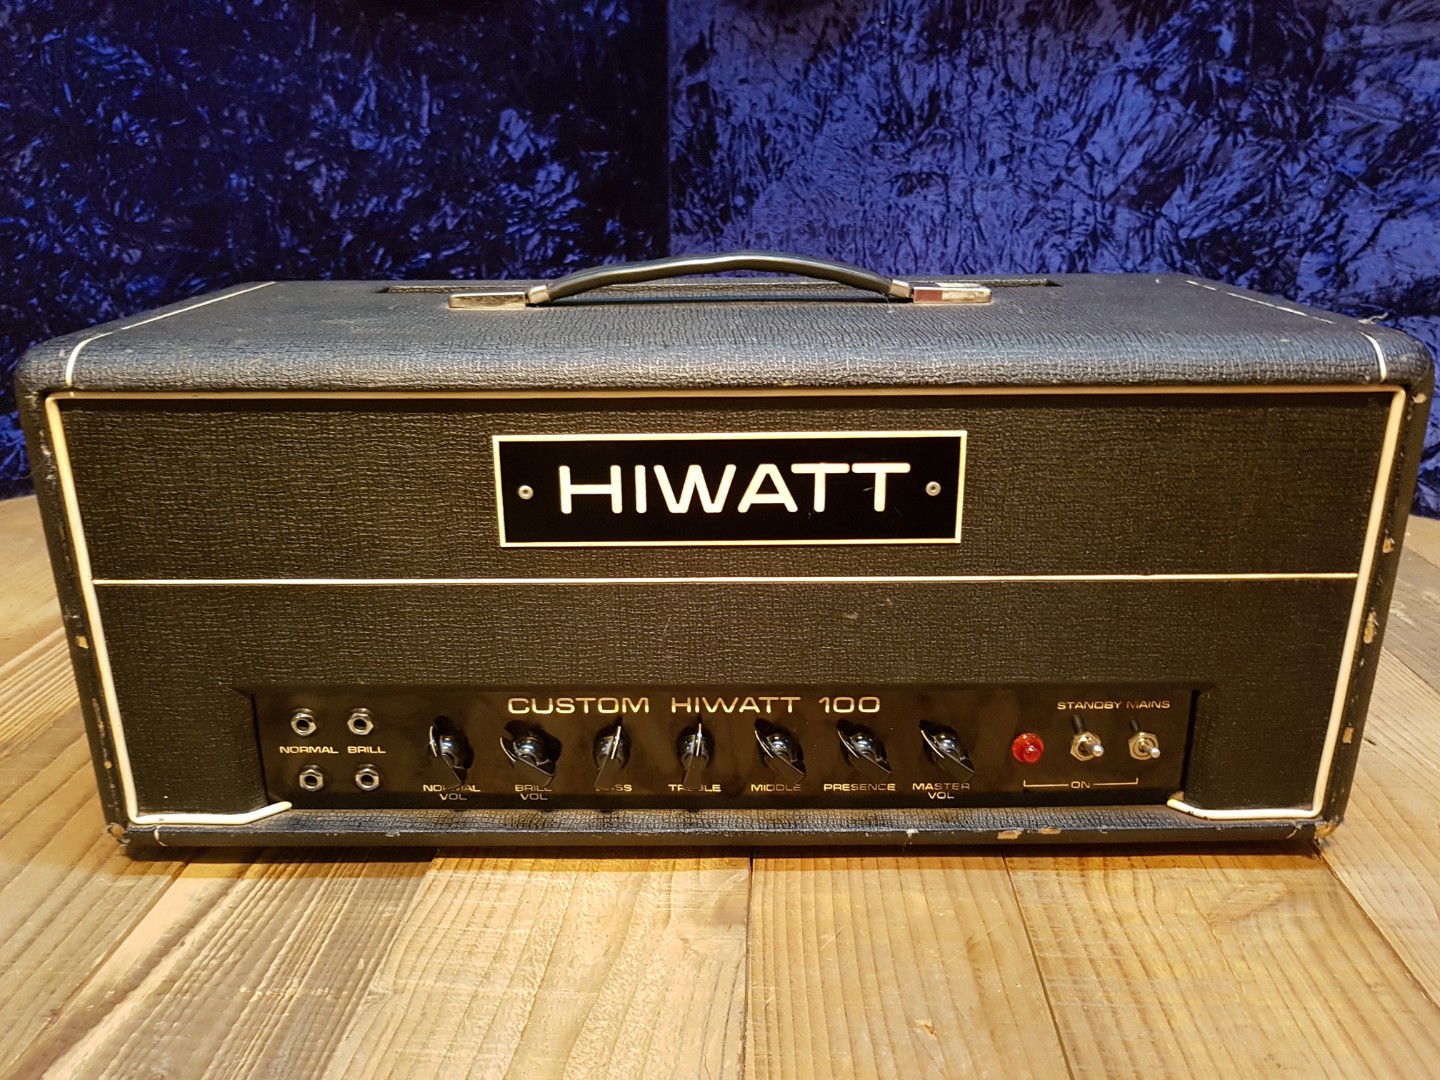 1974 HIWATT Custom 100 DR103